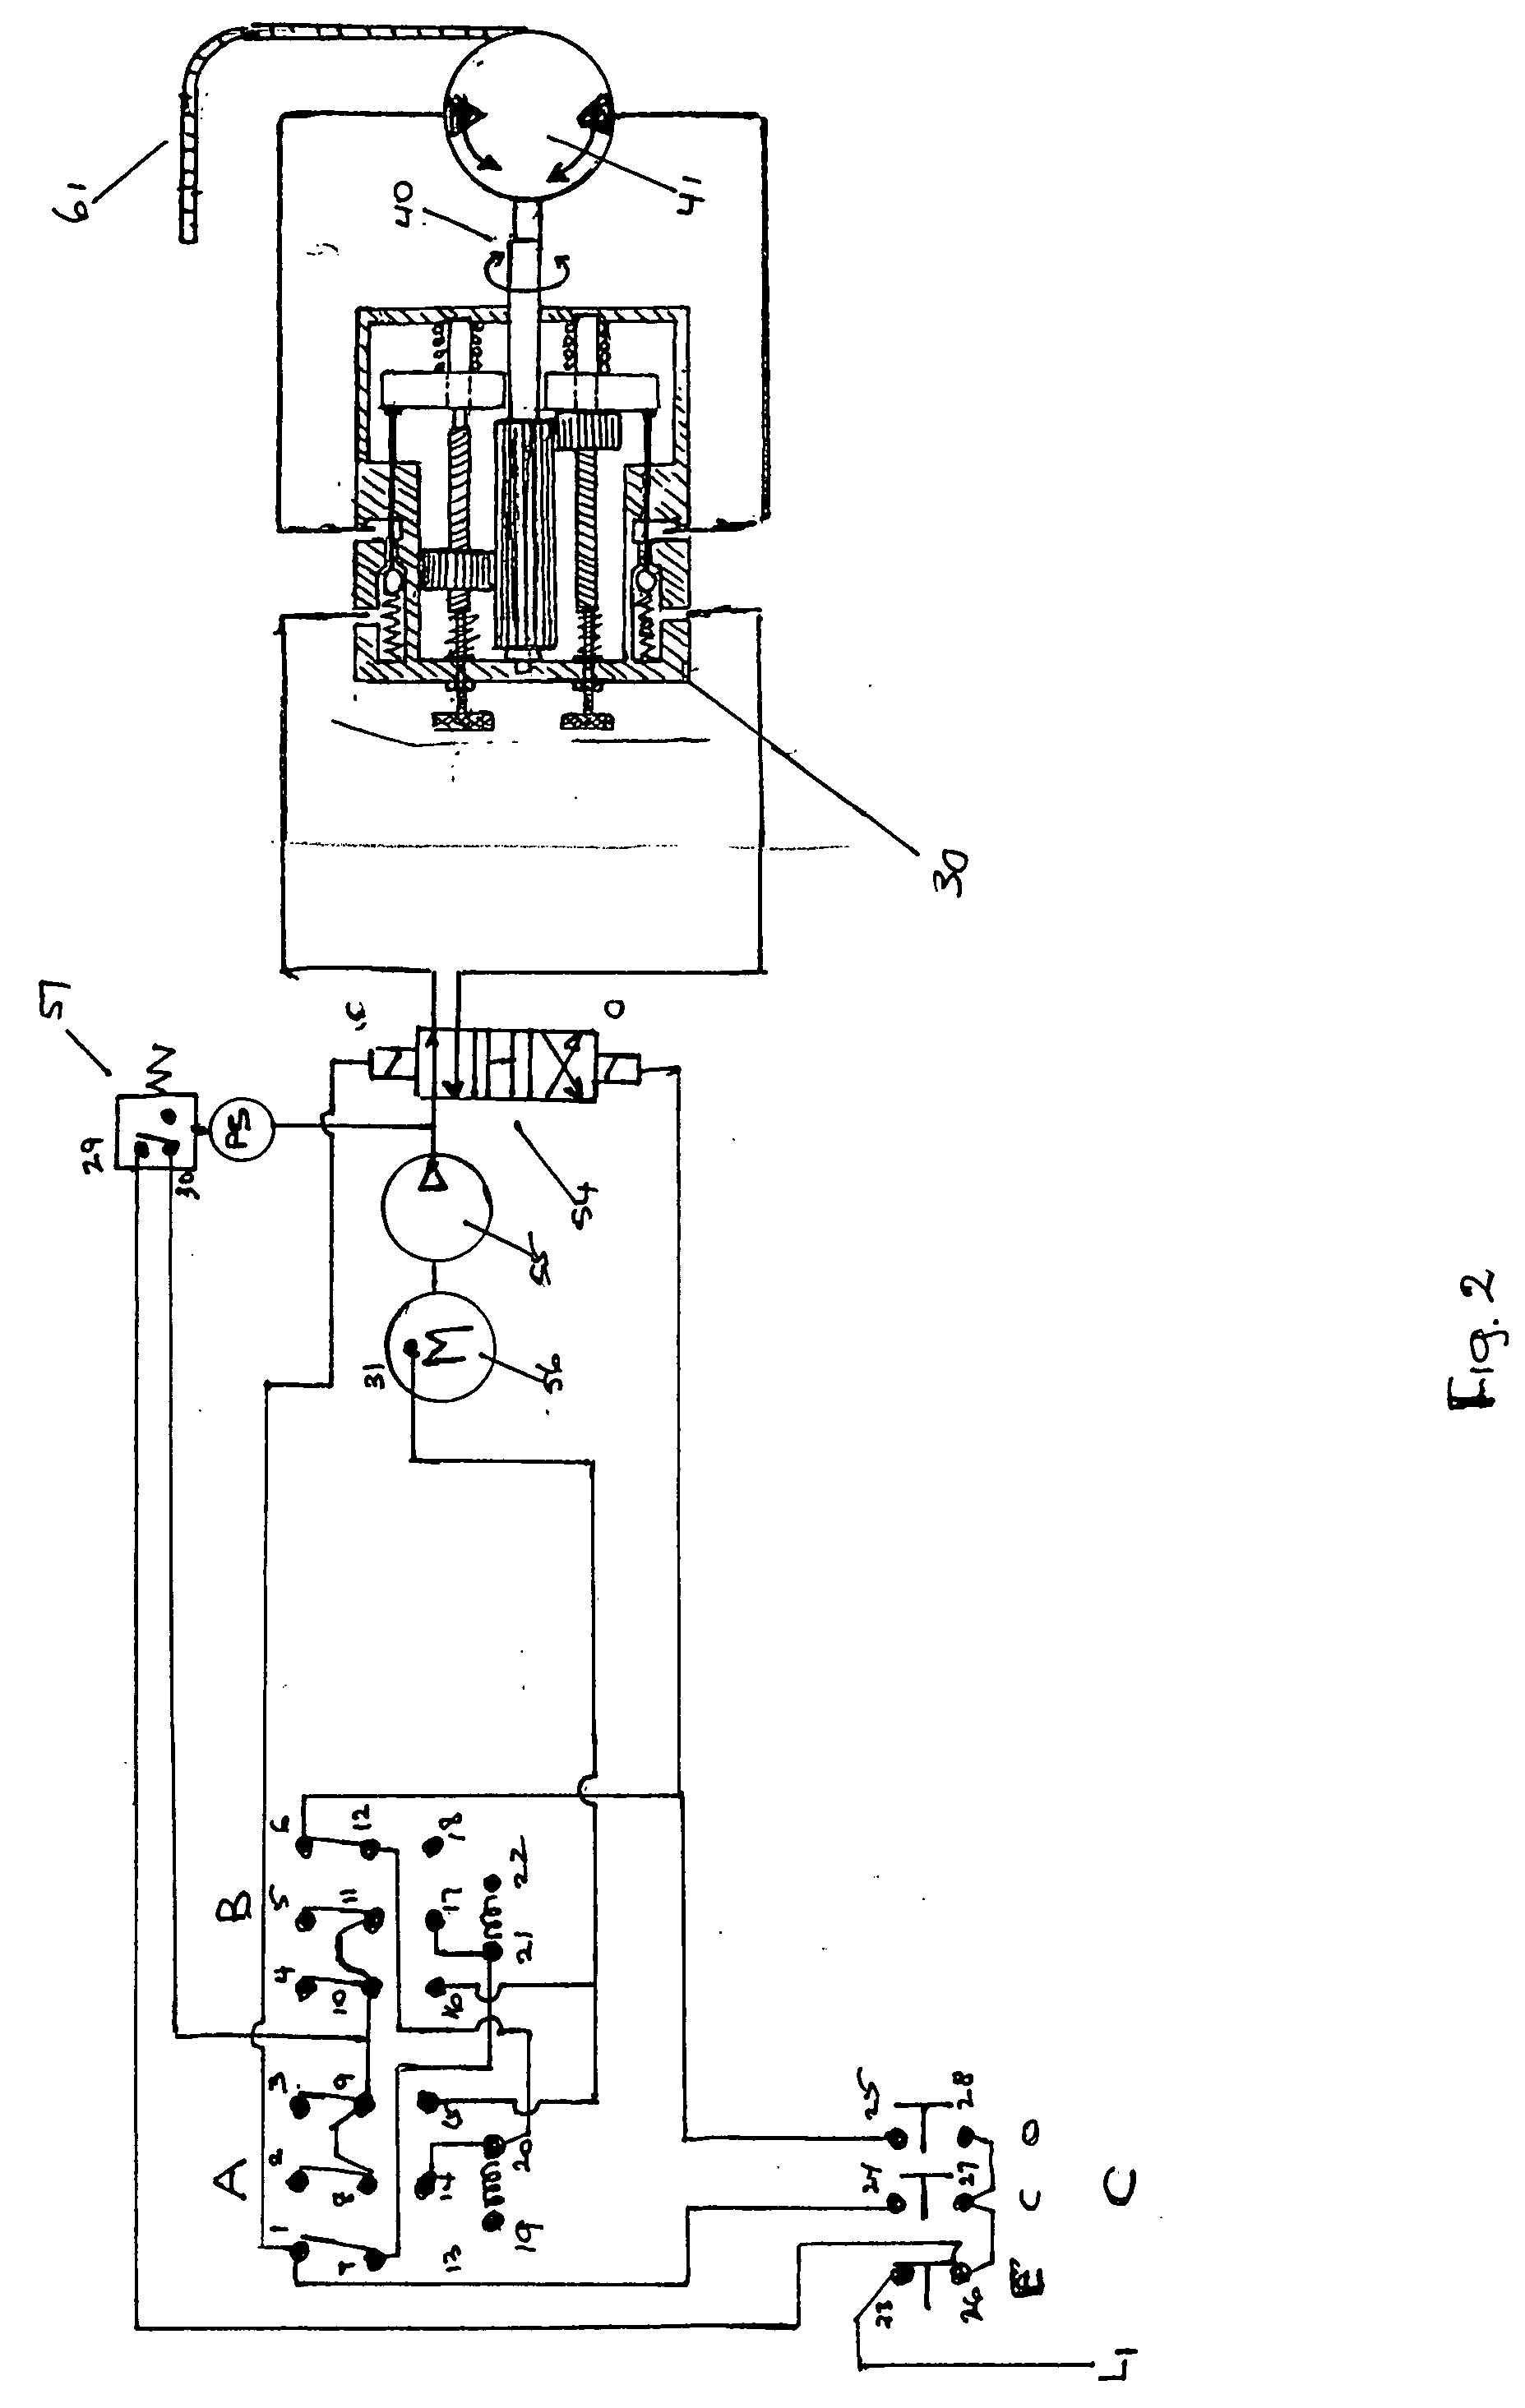 Hydraulic/pneumatic apparatus